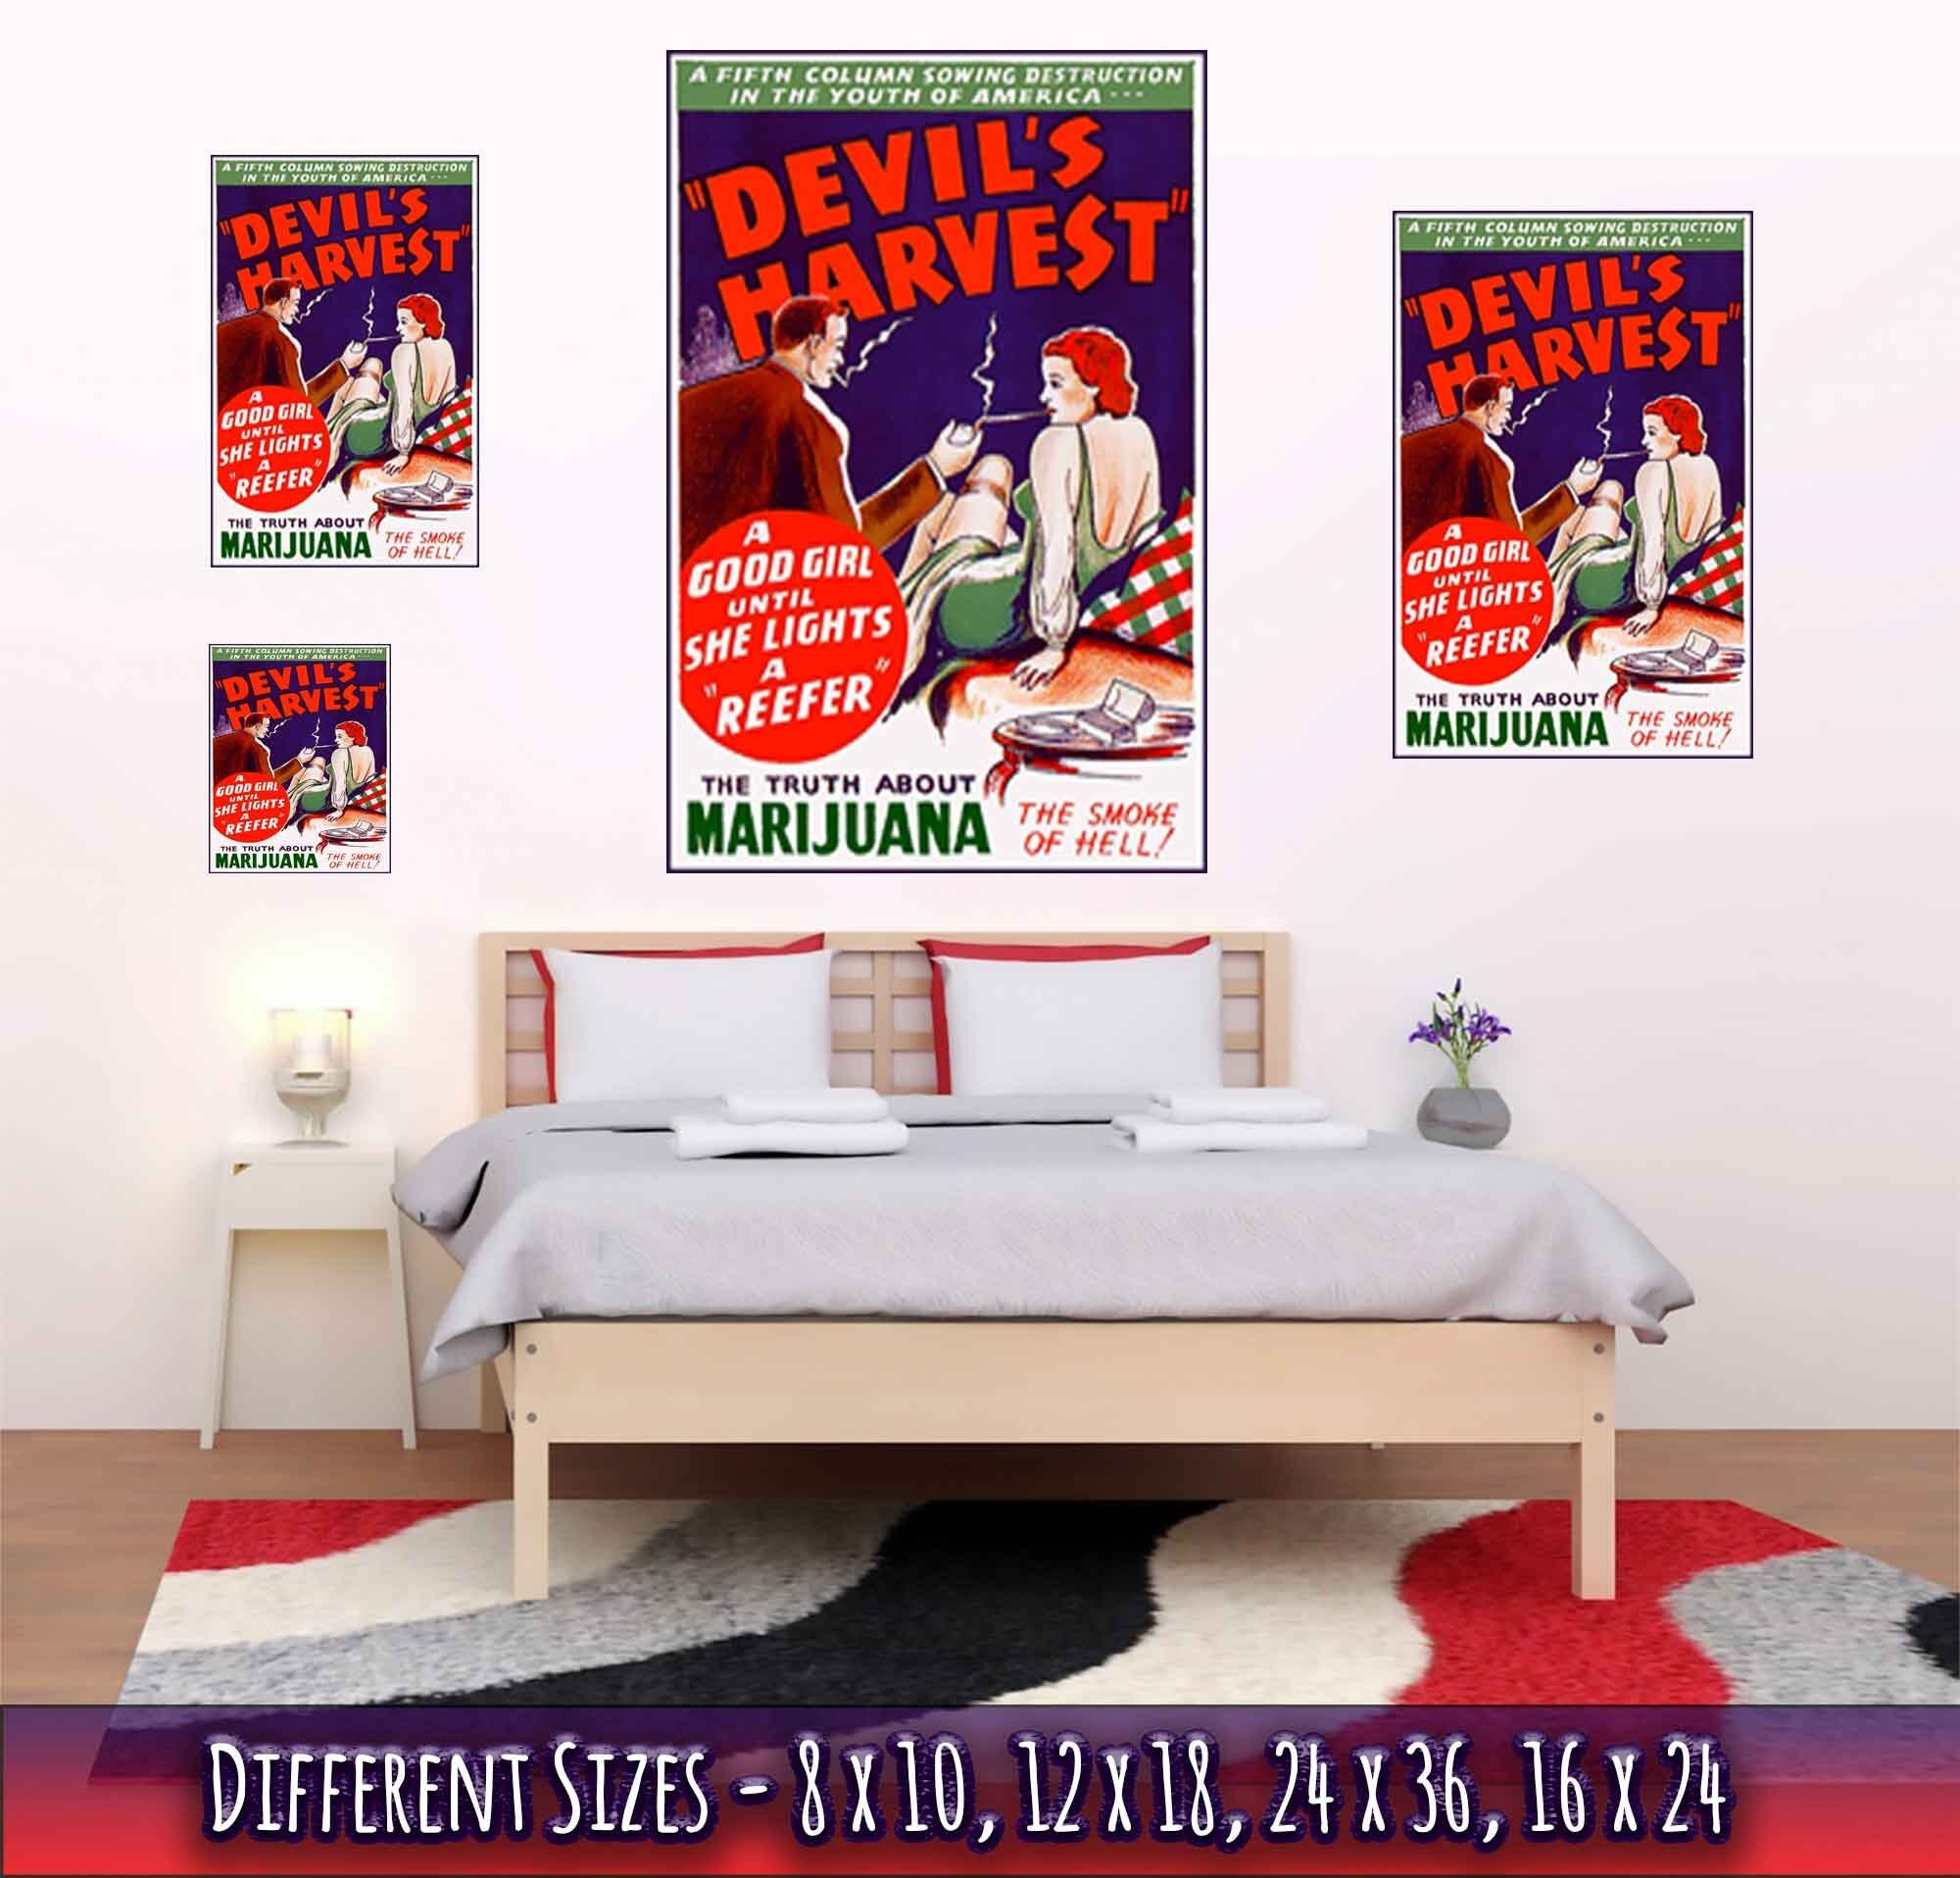 Devils Harvest Propaganda Poster, "Scary" Cannabis Propaganda - Marijuana Propaganda Print - WallArtPrints4U